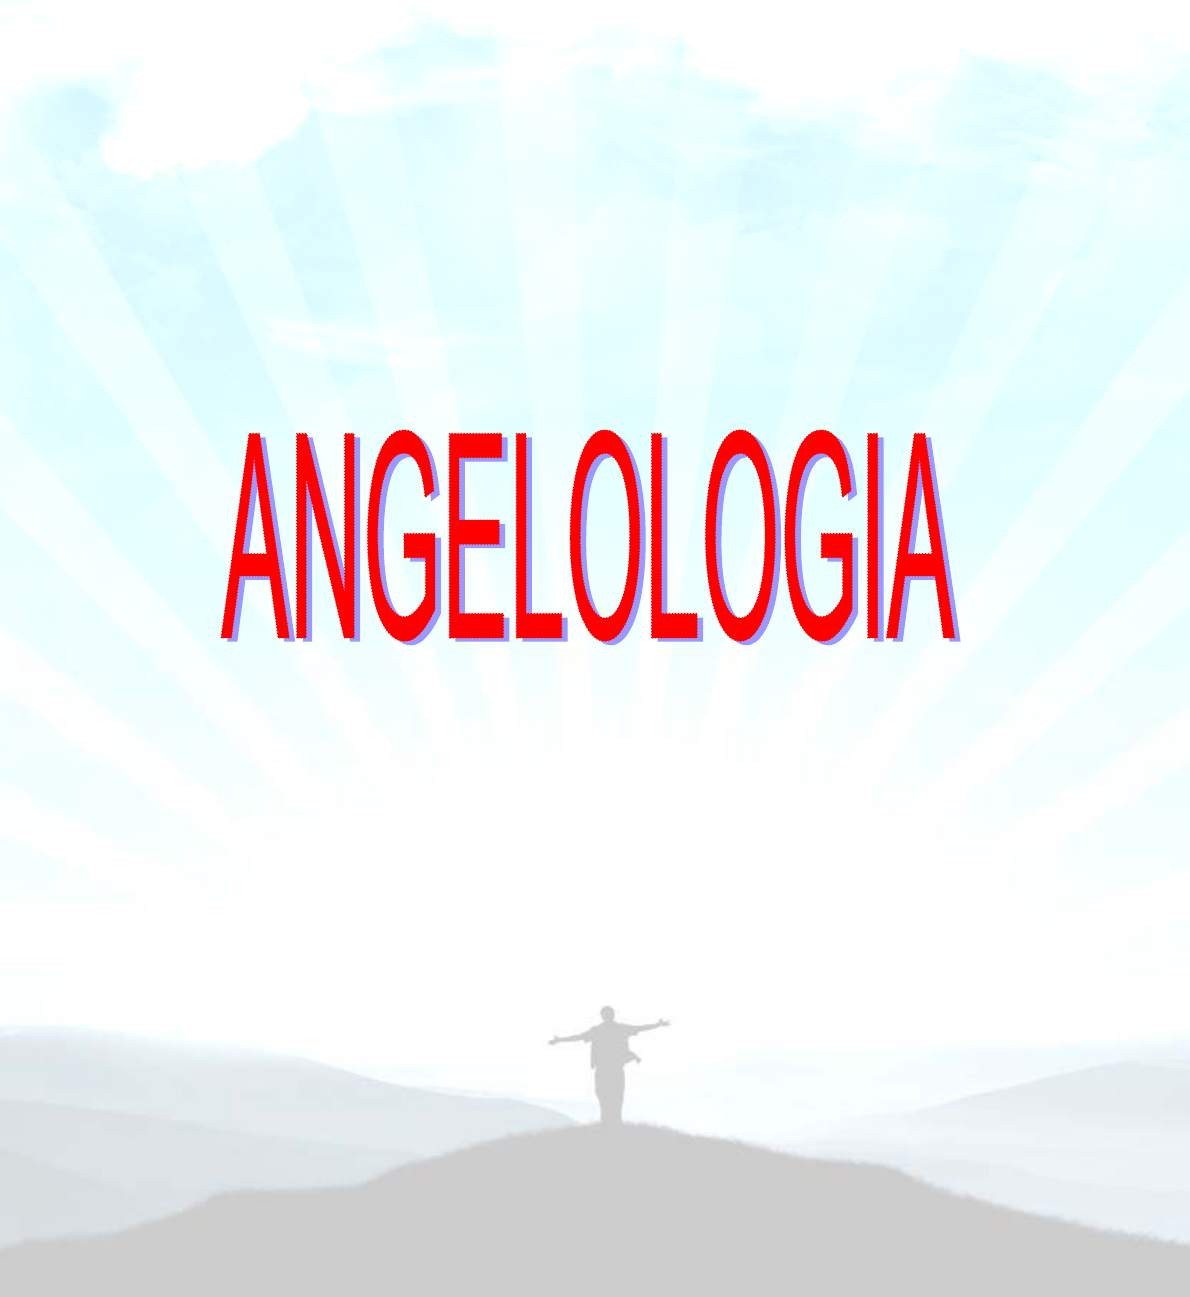 Anjo número 200 - Significado e simbolismo do anjo número 200